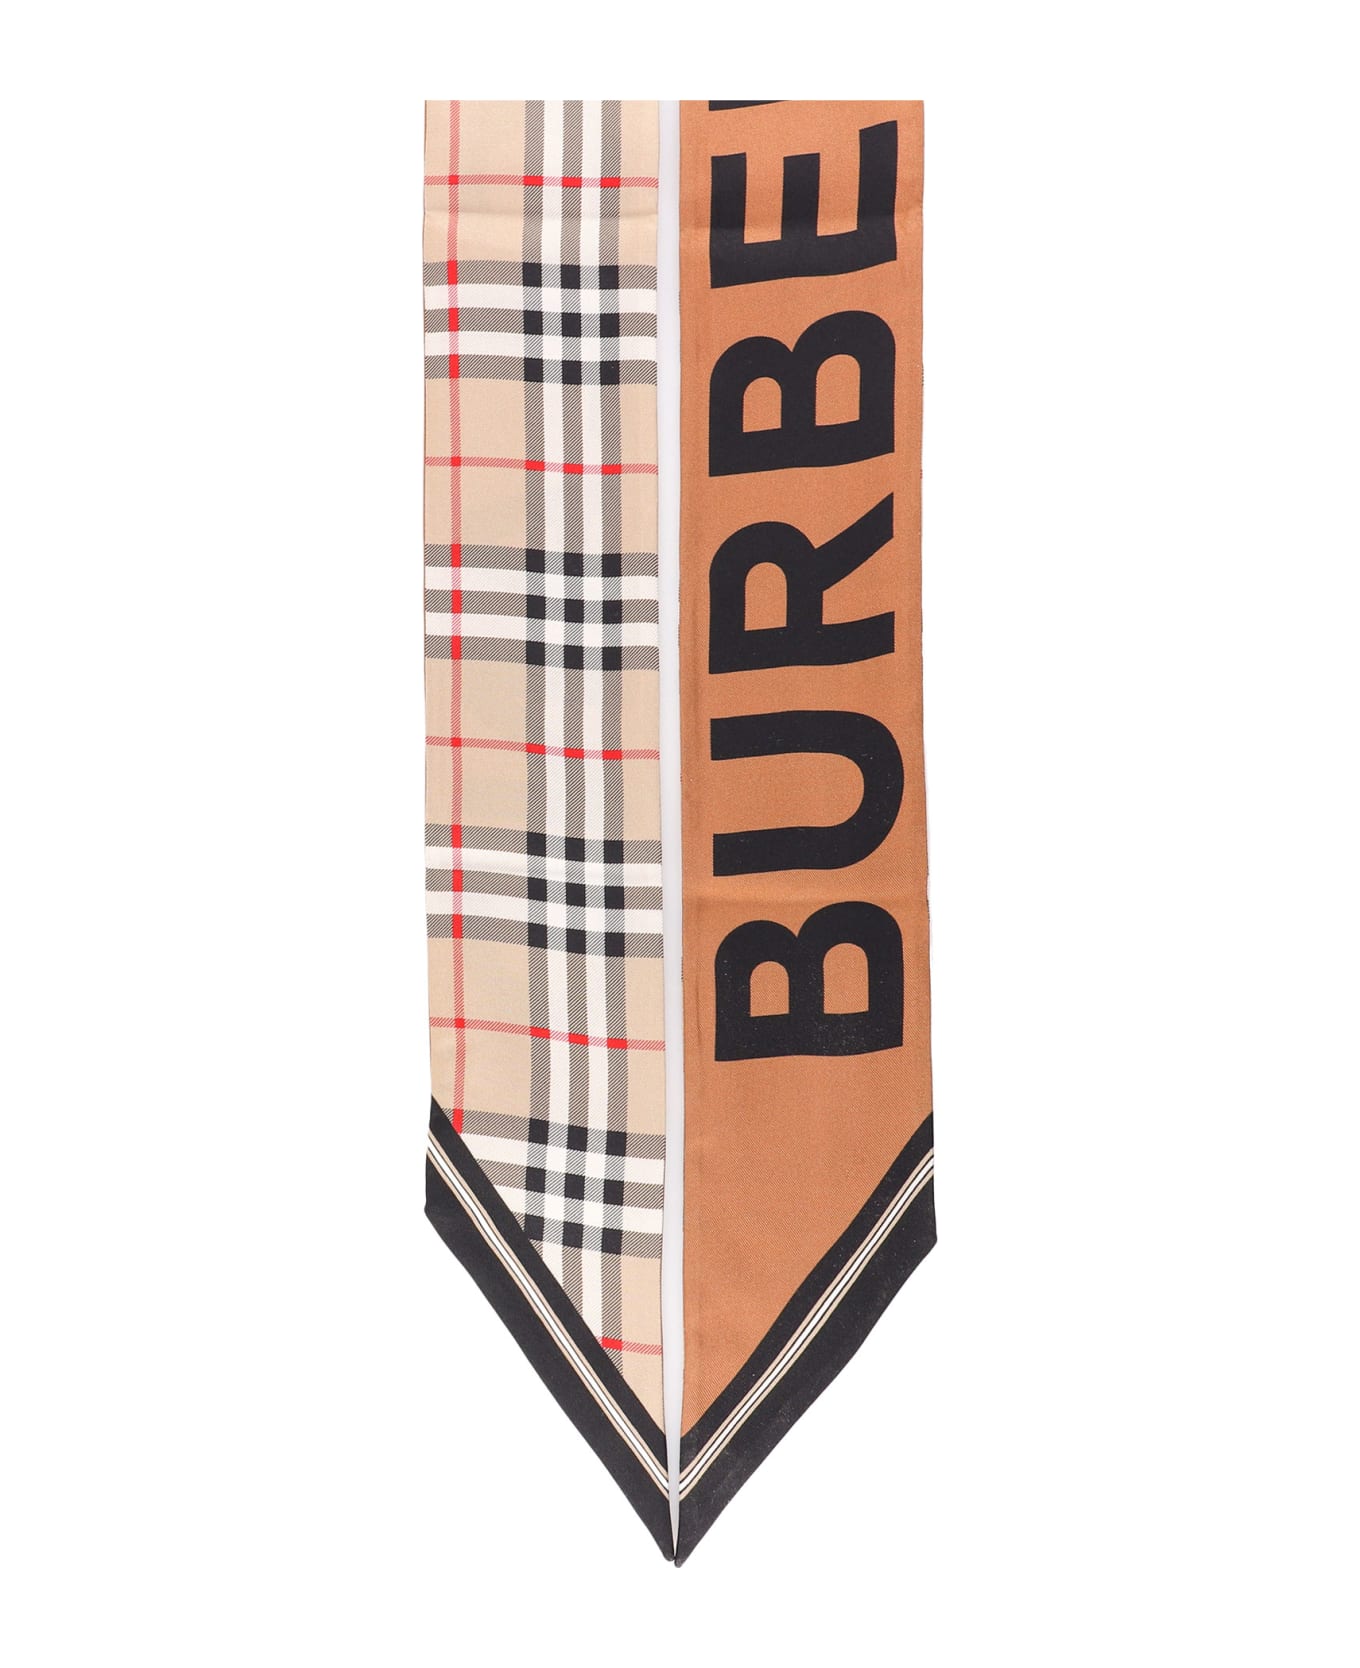 Burberry Scarf - Beige スカーフ